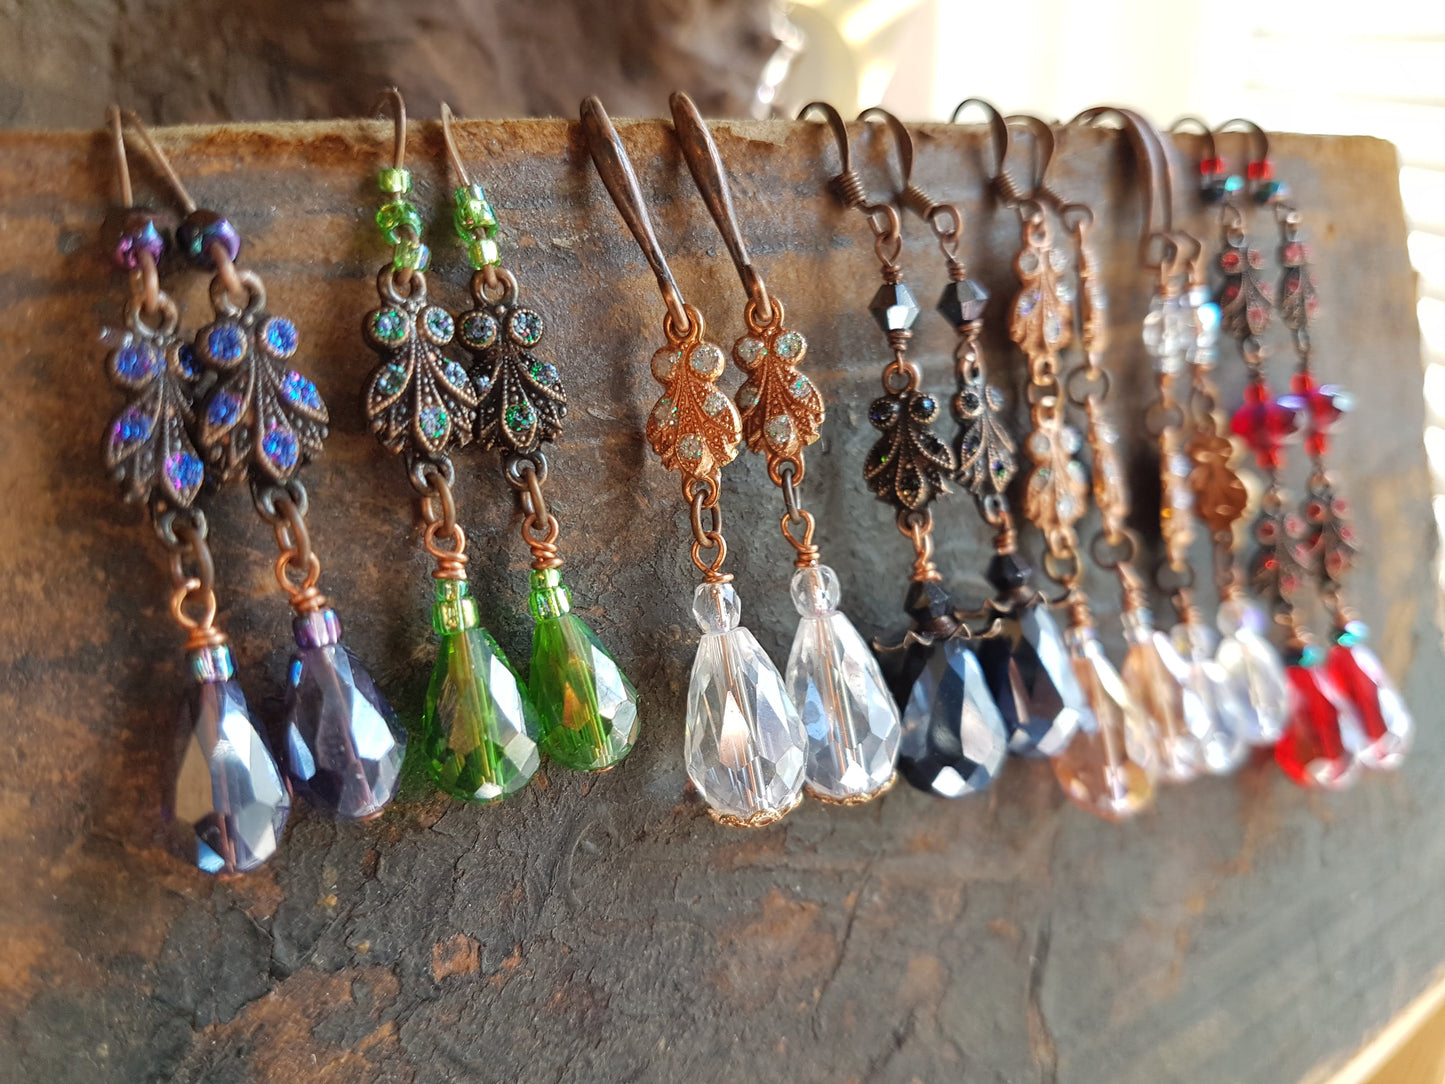 Crystal clear drop earrings with flower bead cap